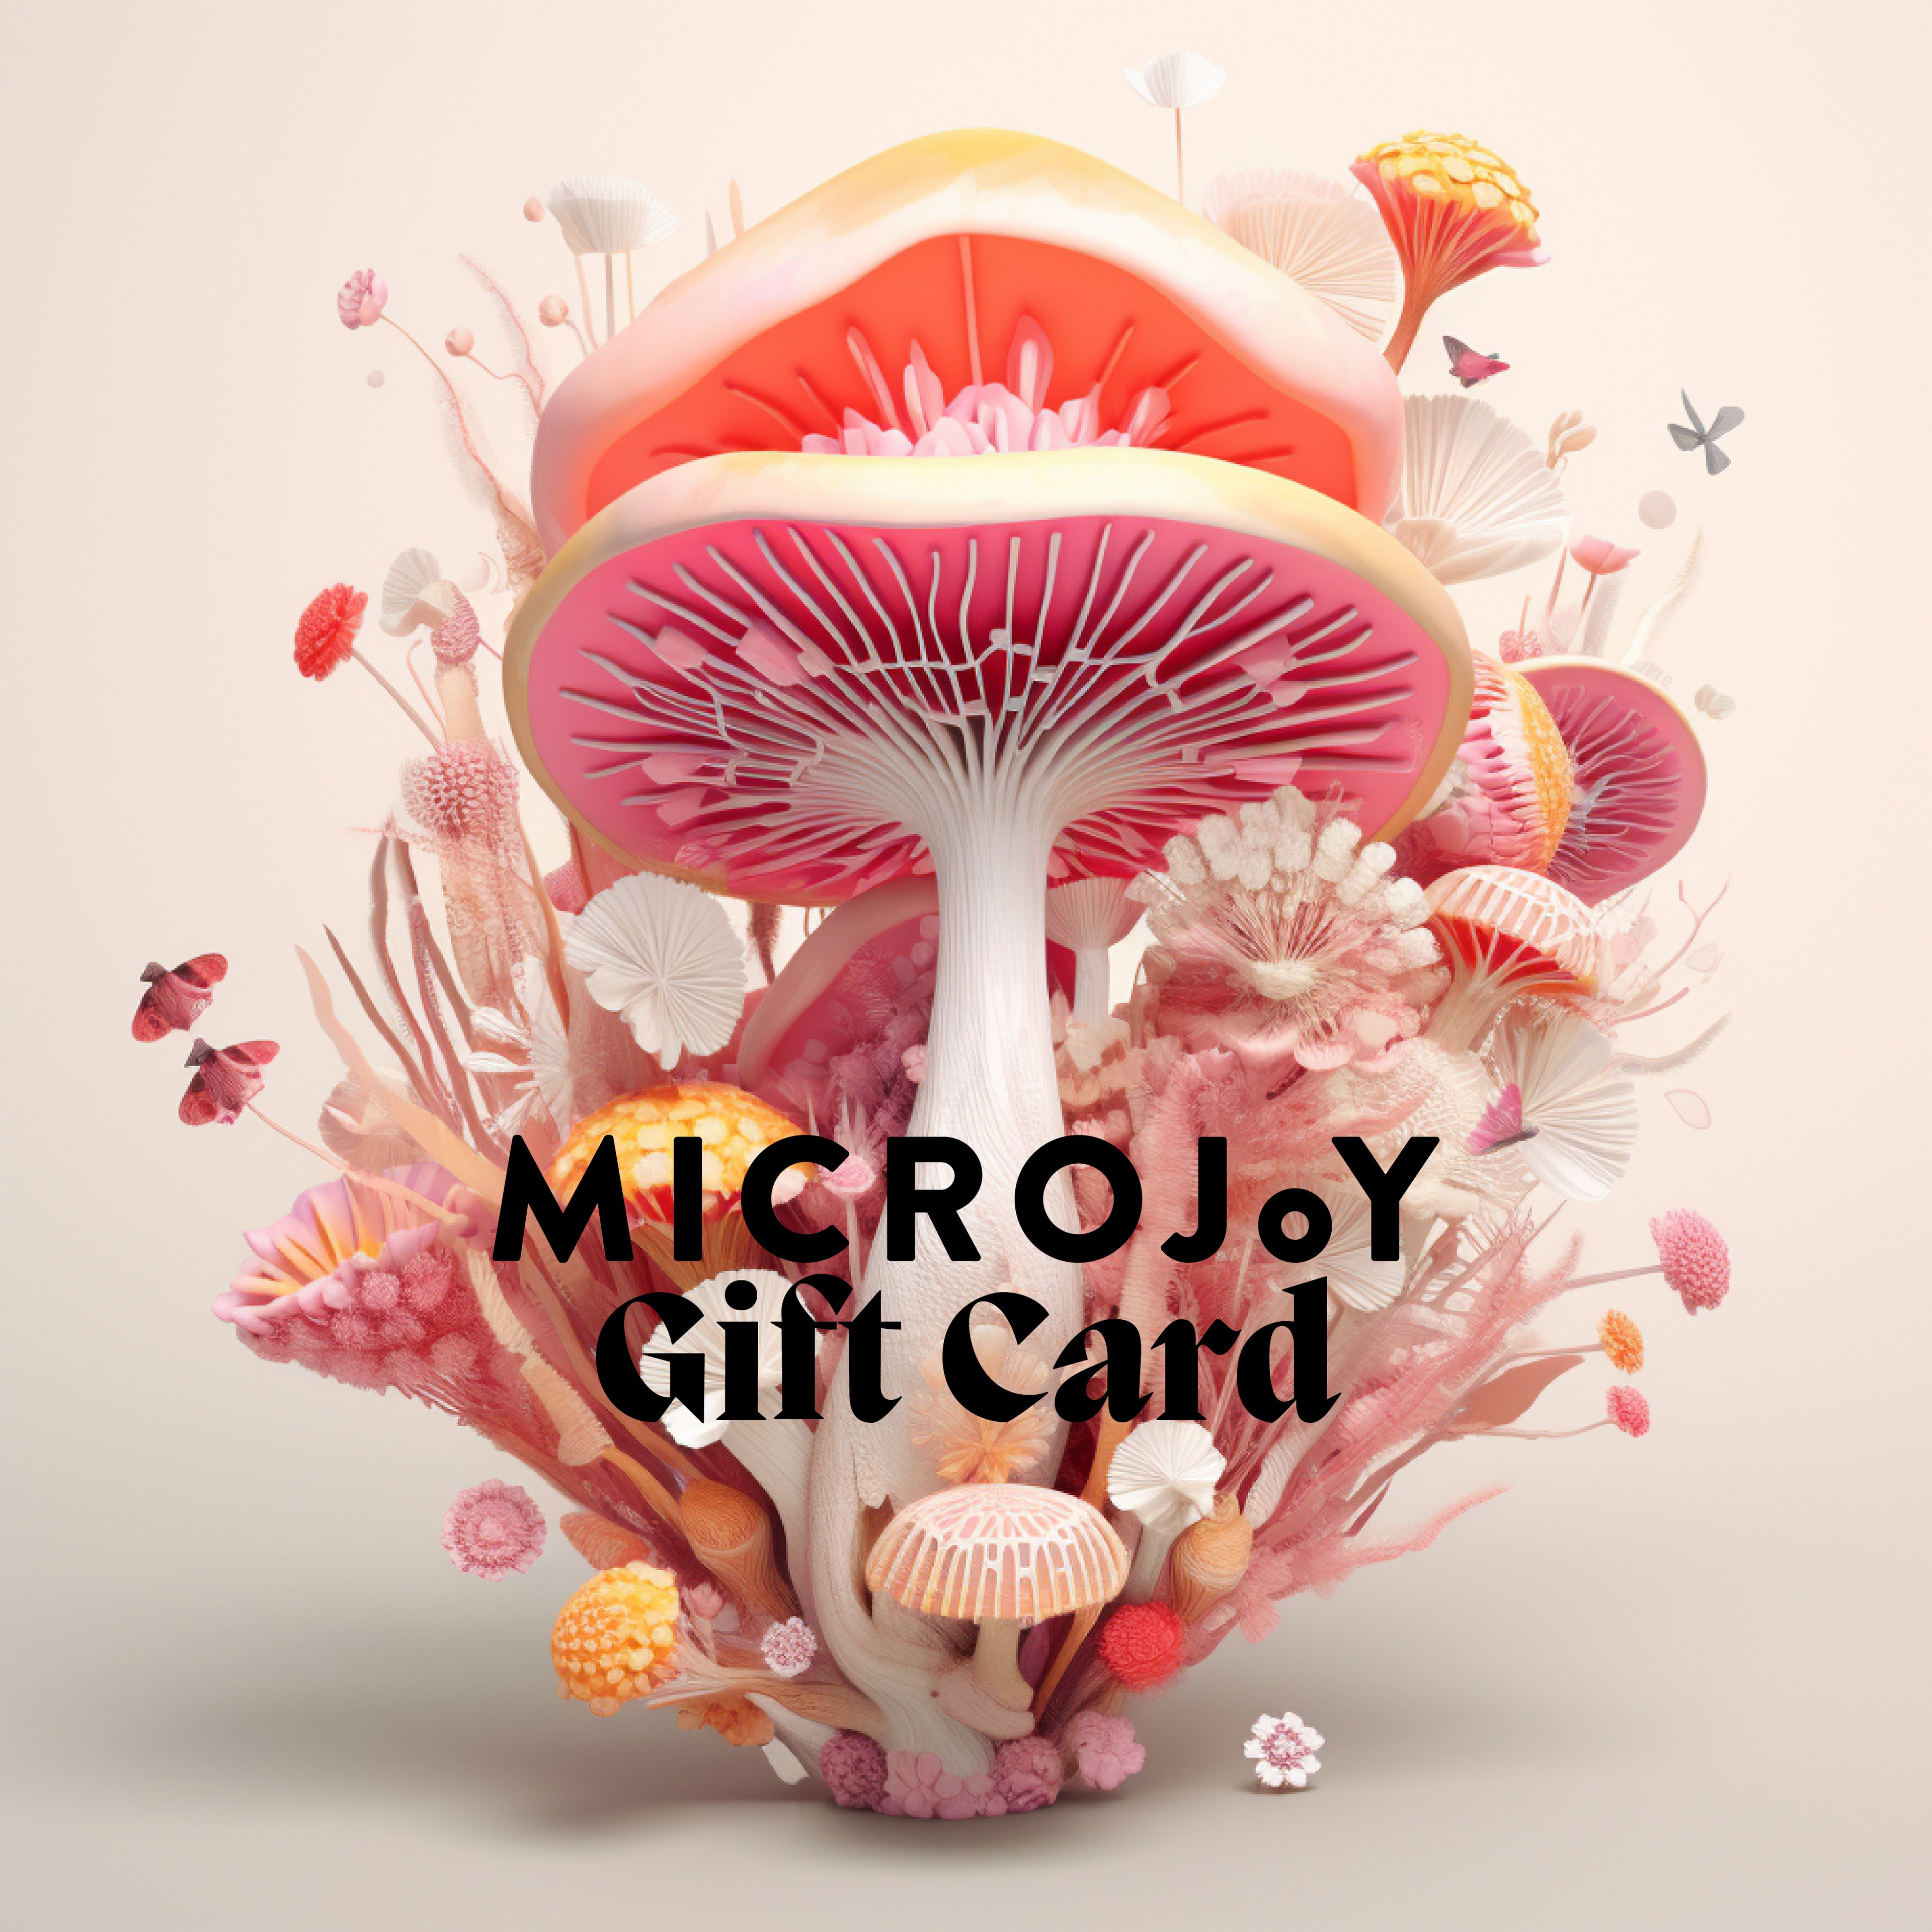 Microjoy Gift Card